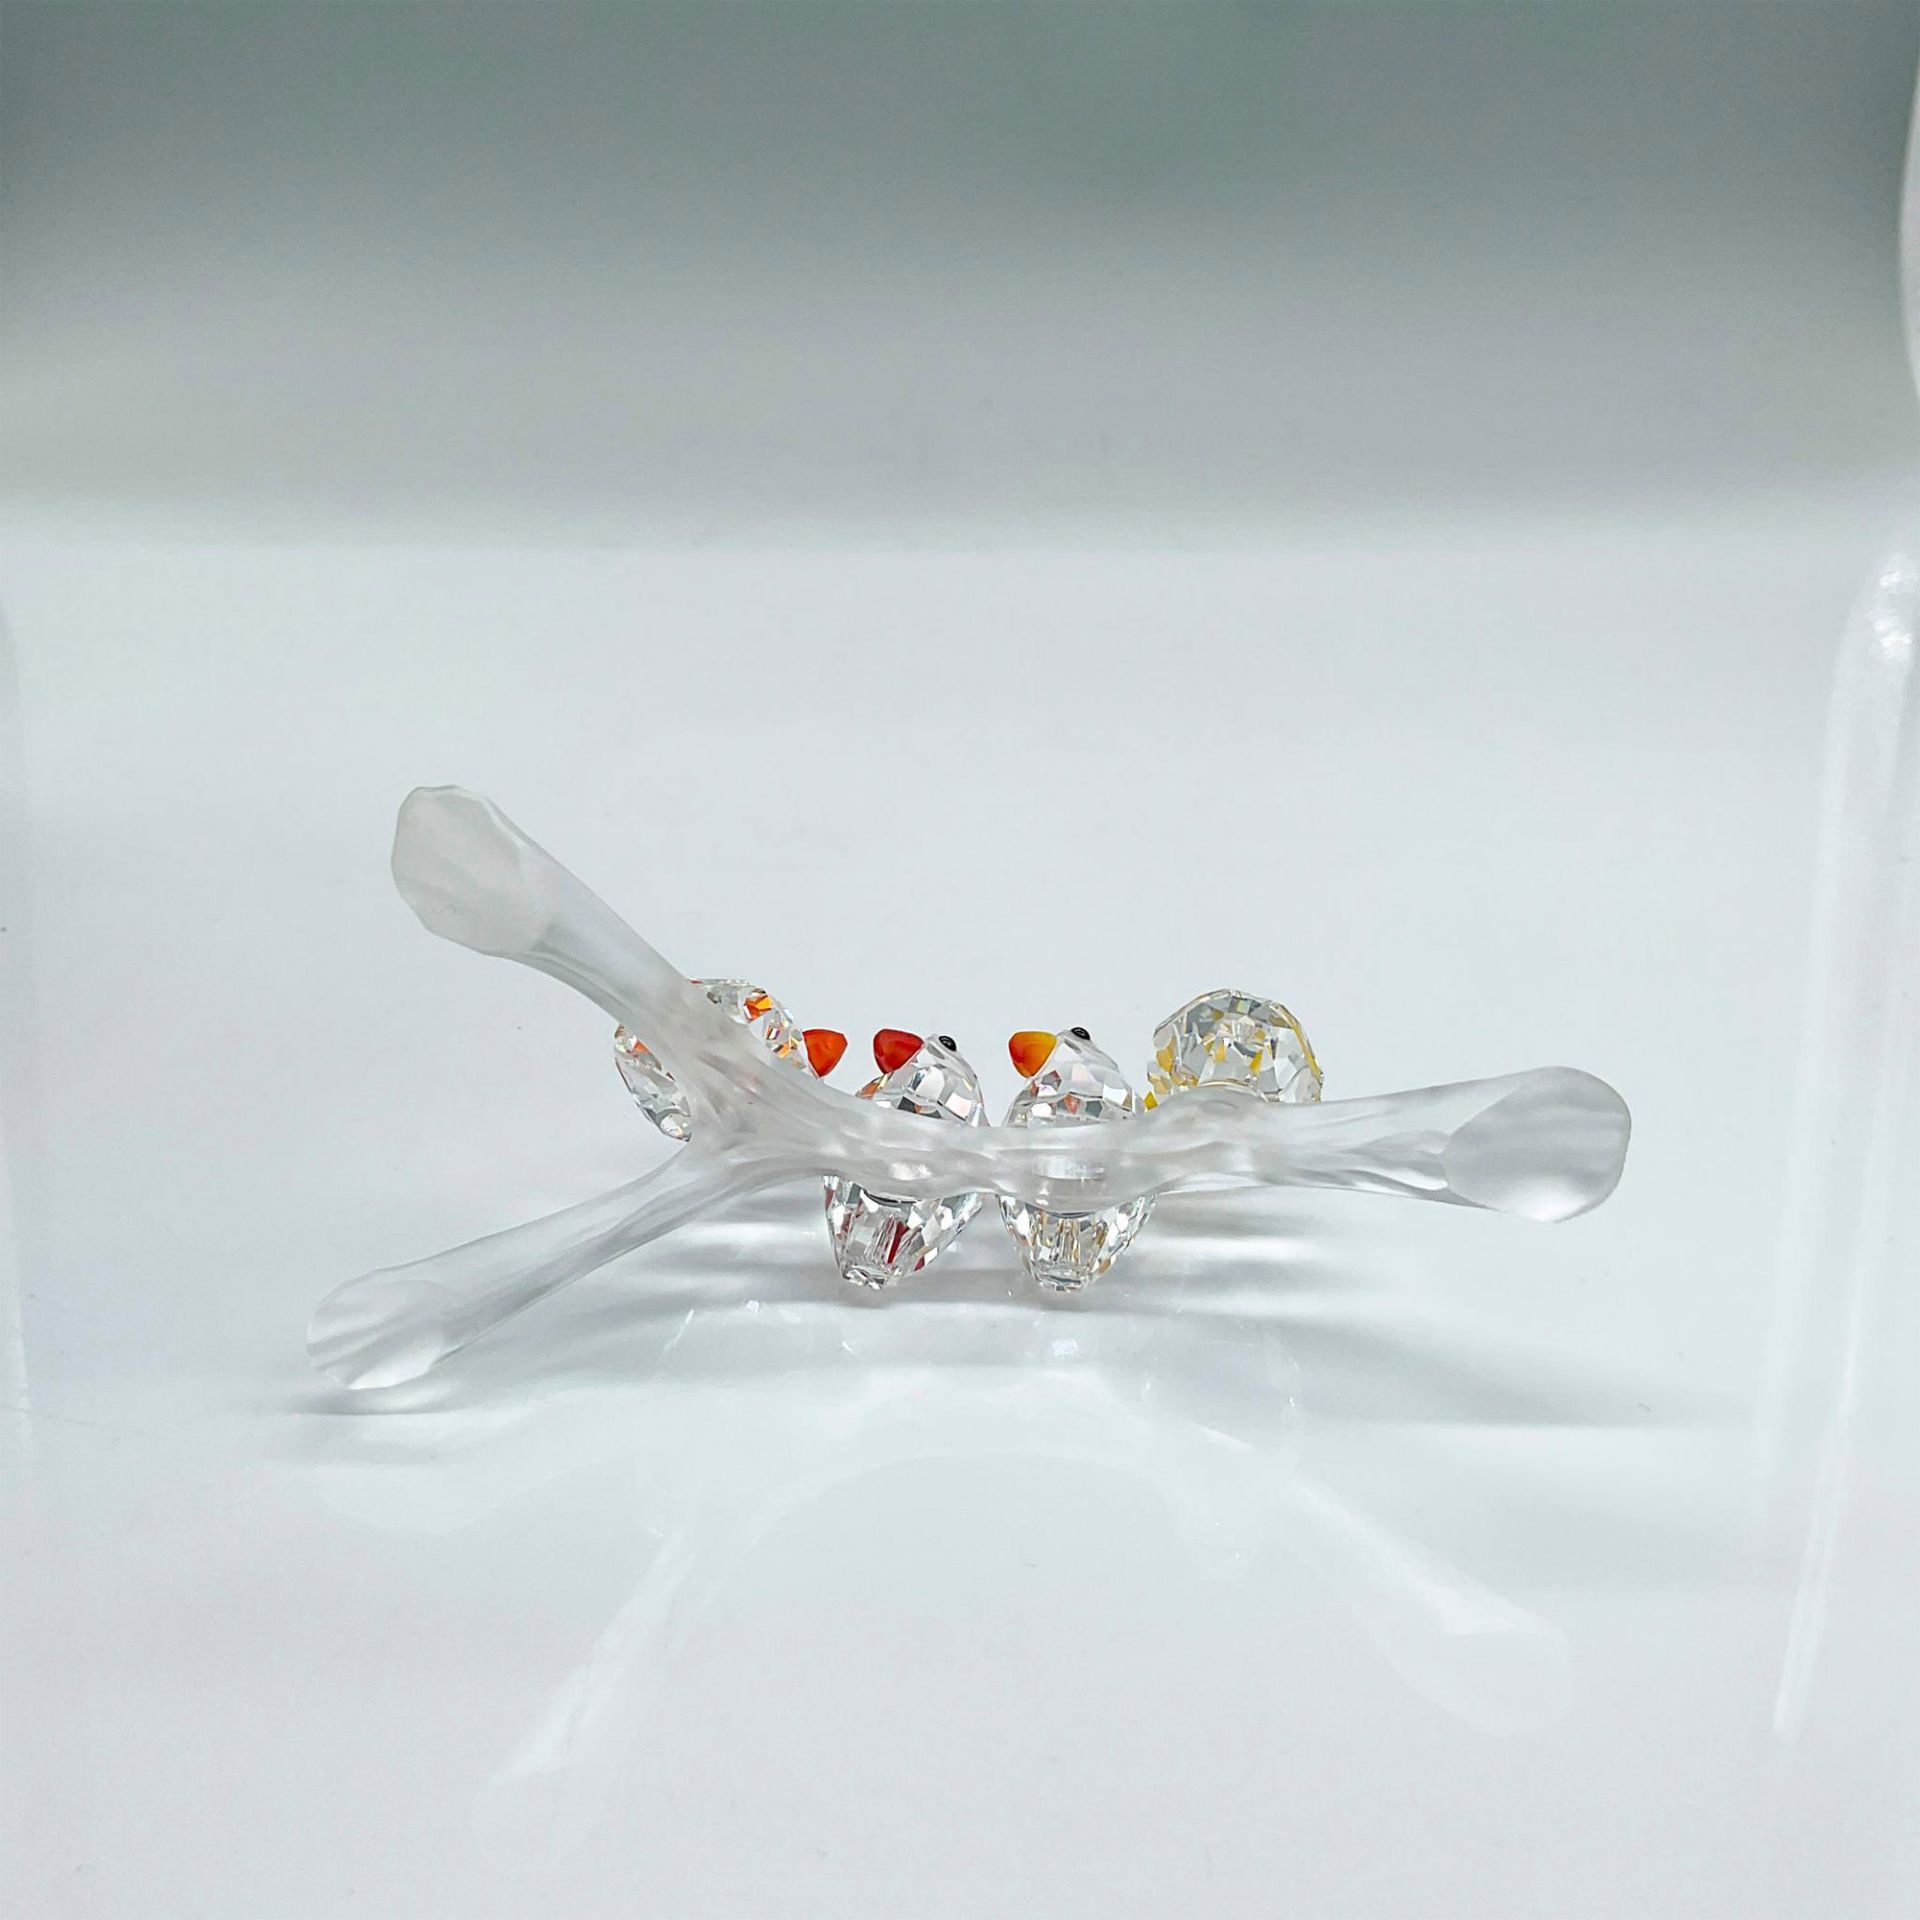 Swarovski Crystal Figurine, Baby Lovebirds - Image 3 of 4